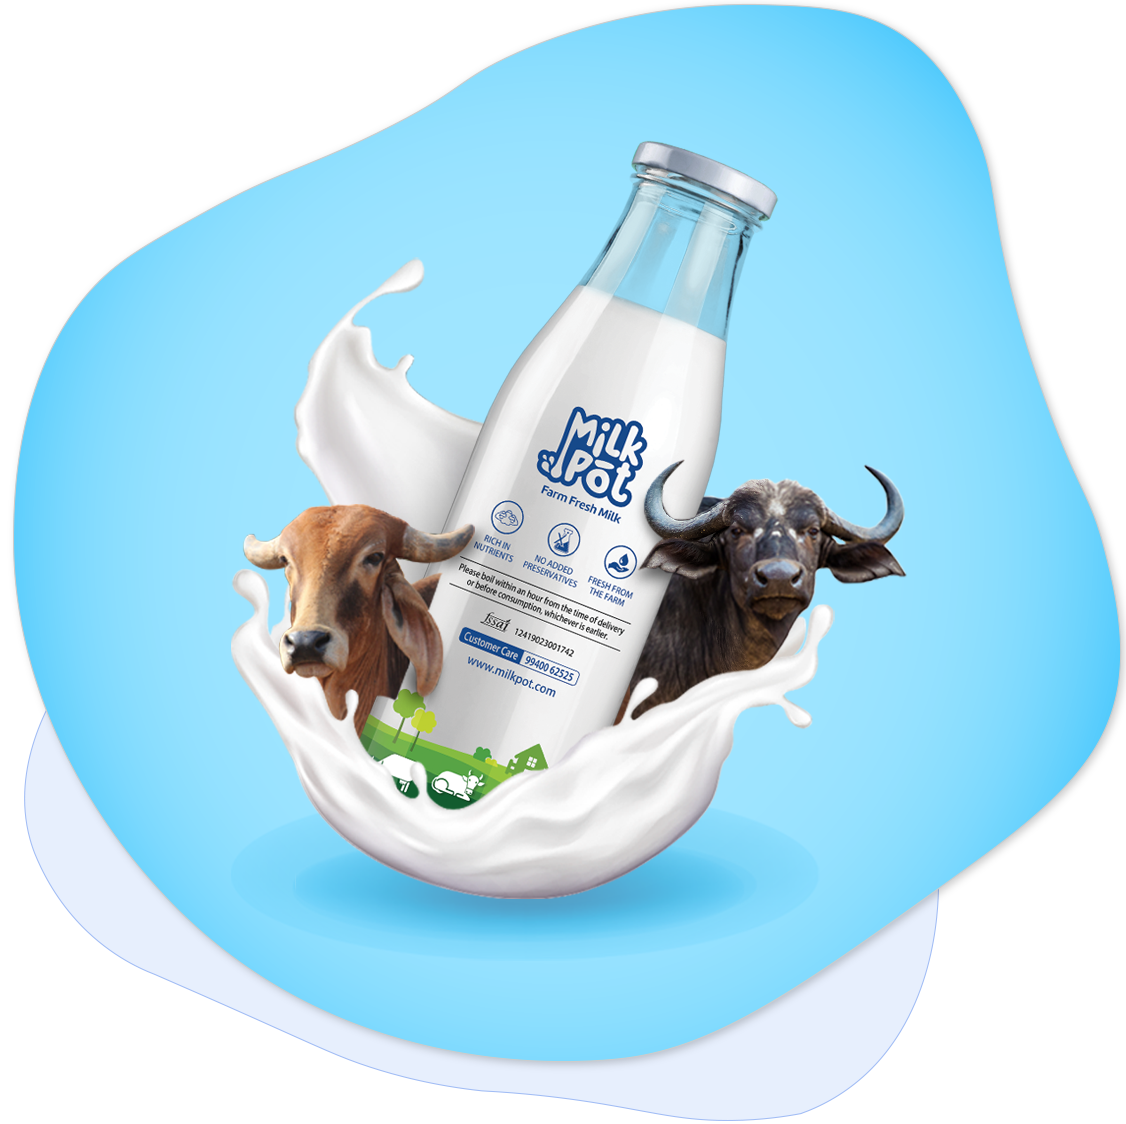 Farm Fresh A2 Milk Bottle from Milk Pot. Cow Milk & Buffalo Milk.